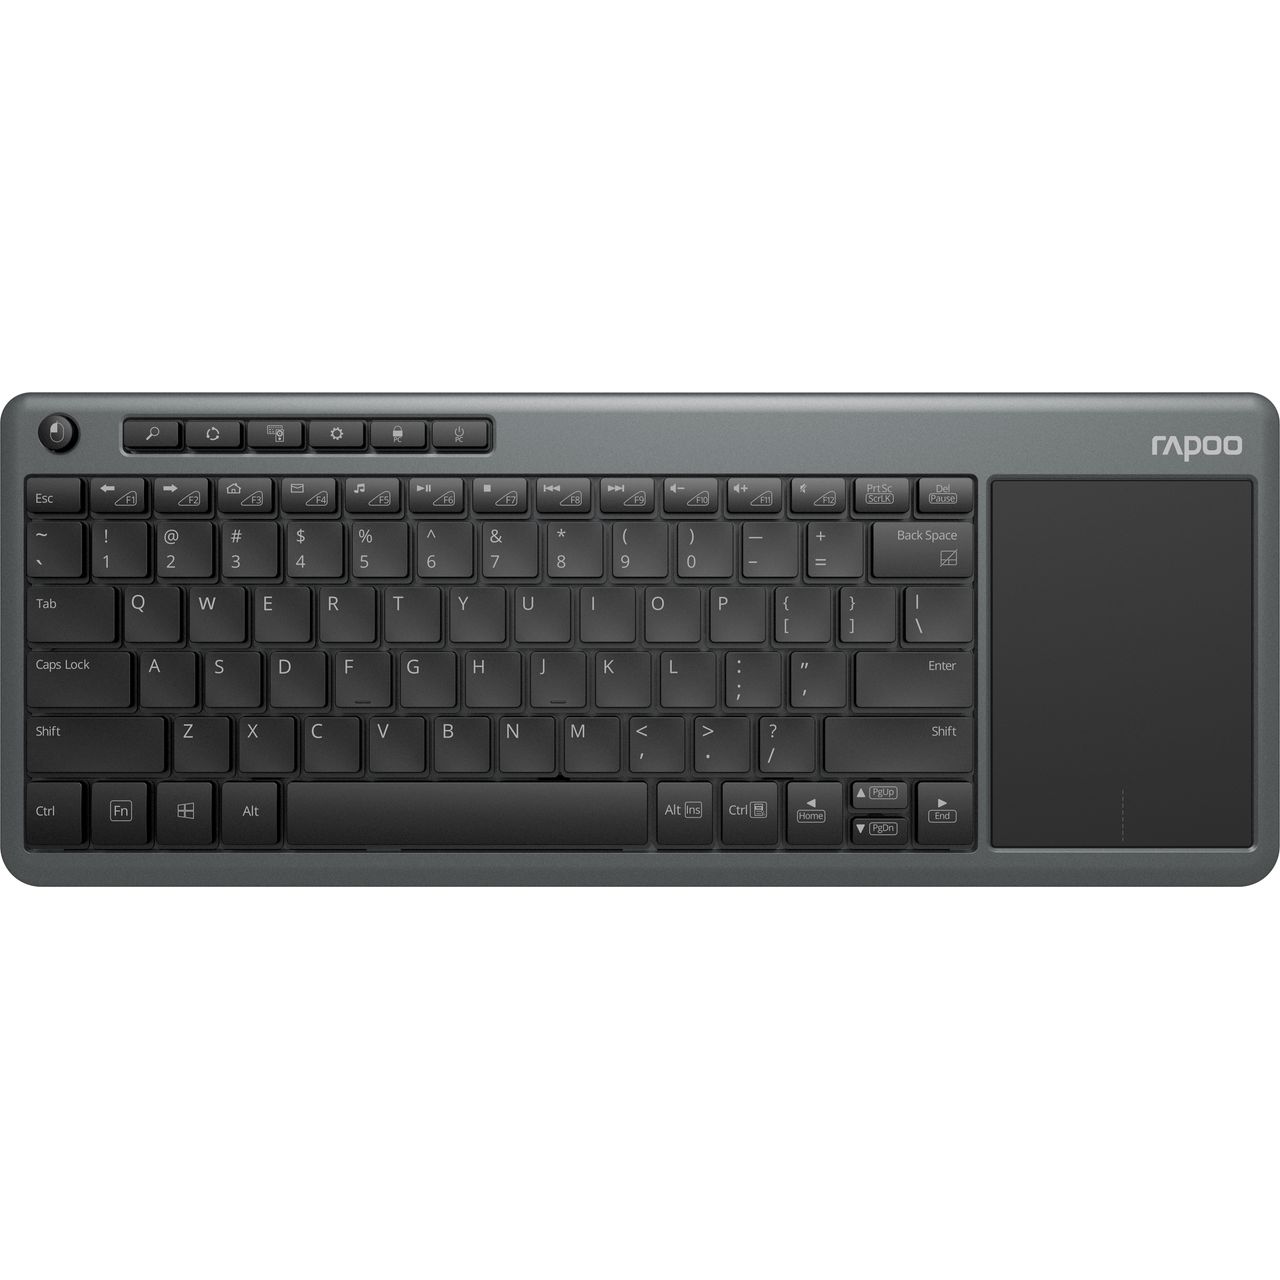 Rapoo K2600 Multimedia Bluetooth / Wireless USB Keyboard Review